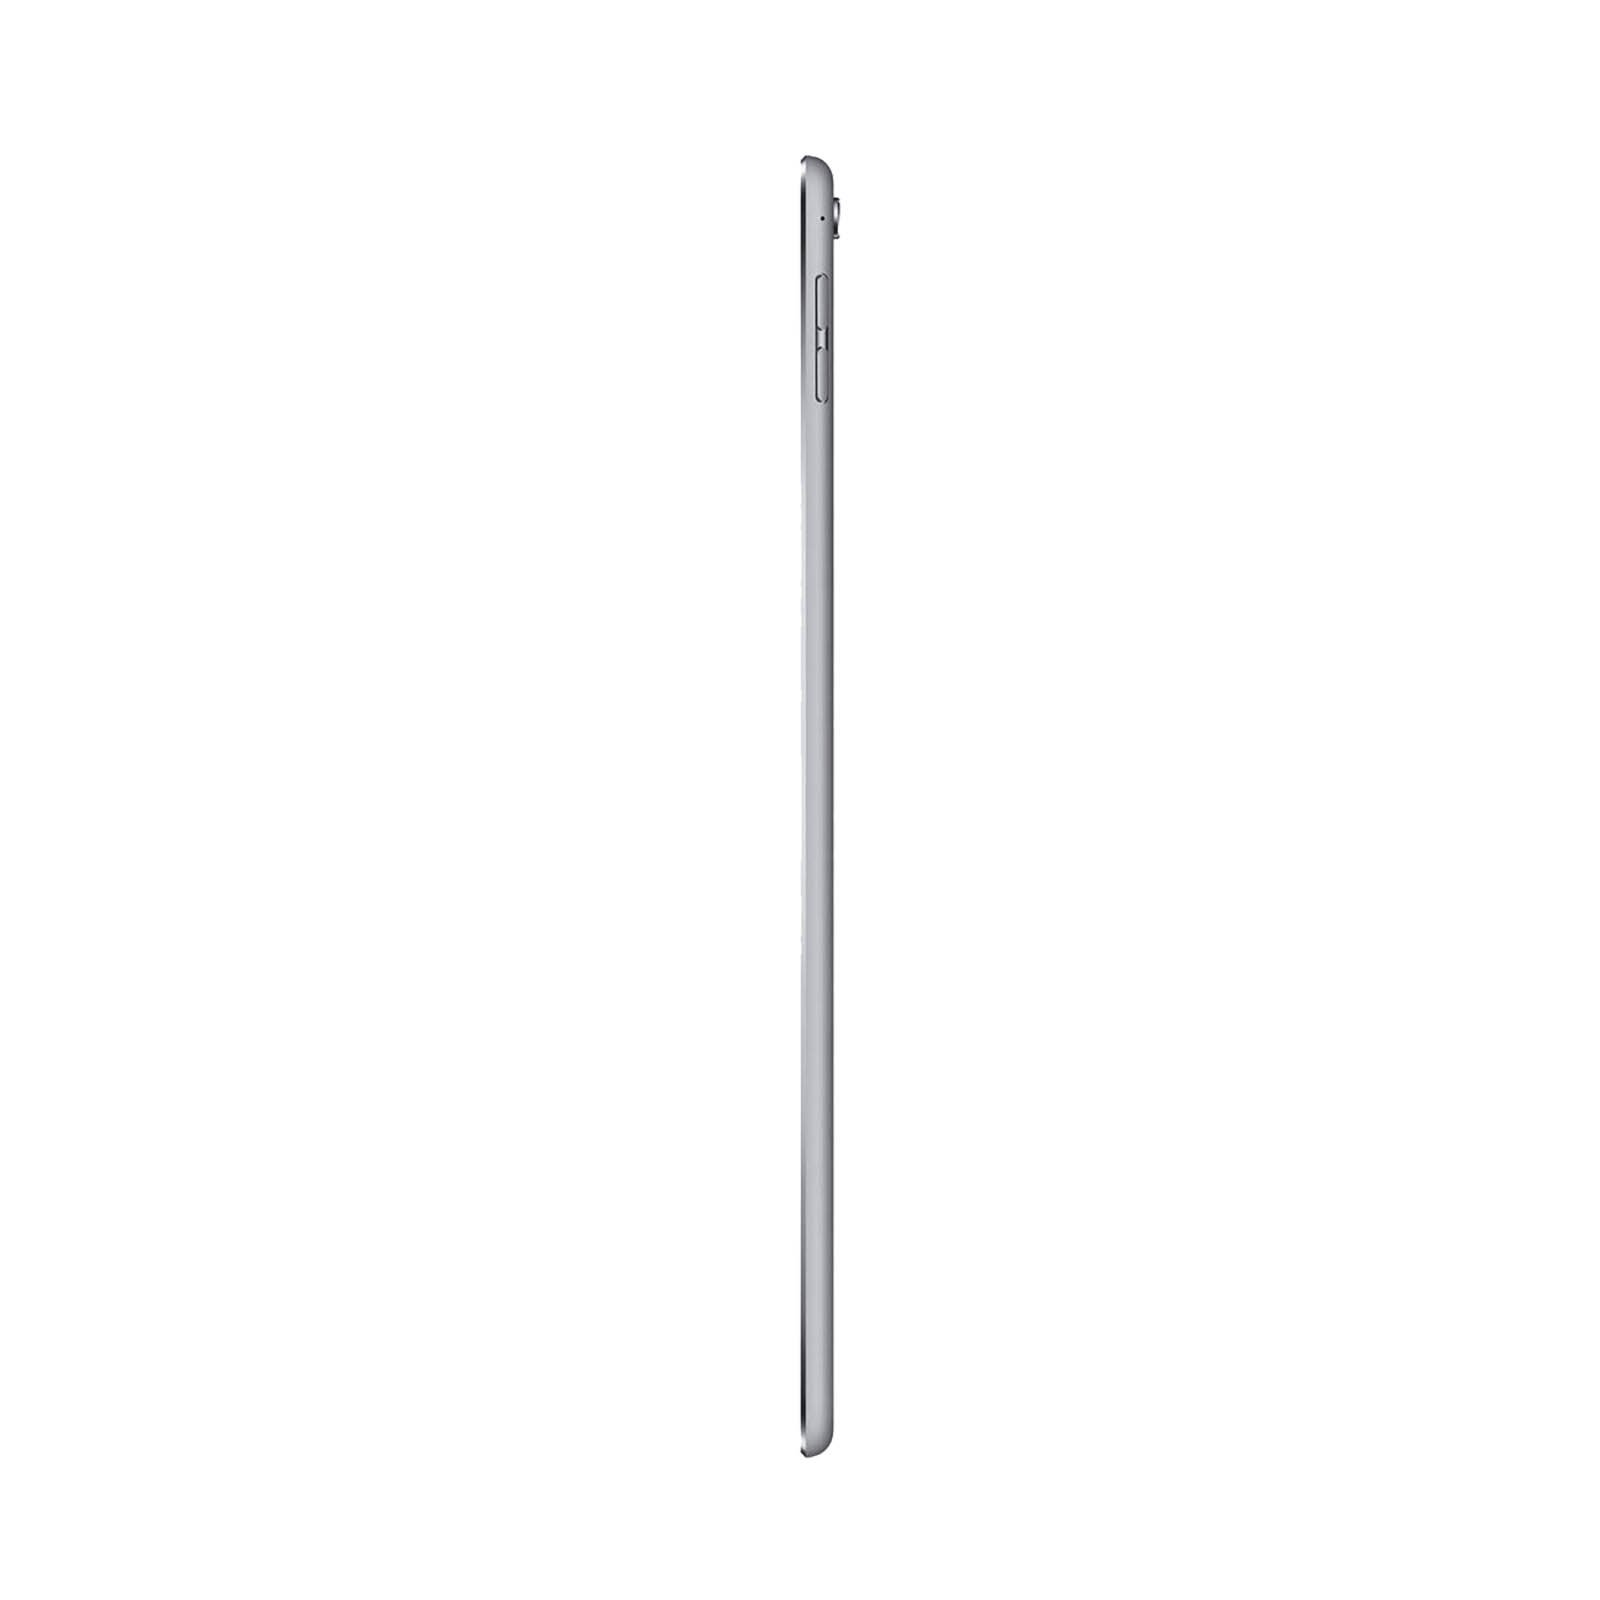 iPad Pro 9.7 Inch 32GB Space Grey Pristine - Unlocked